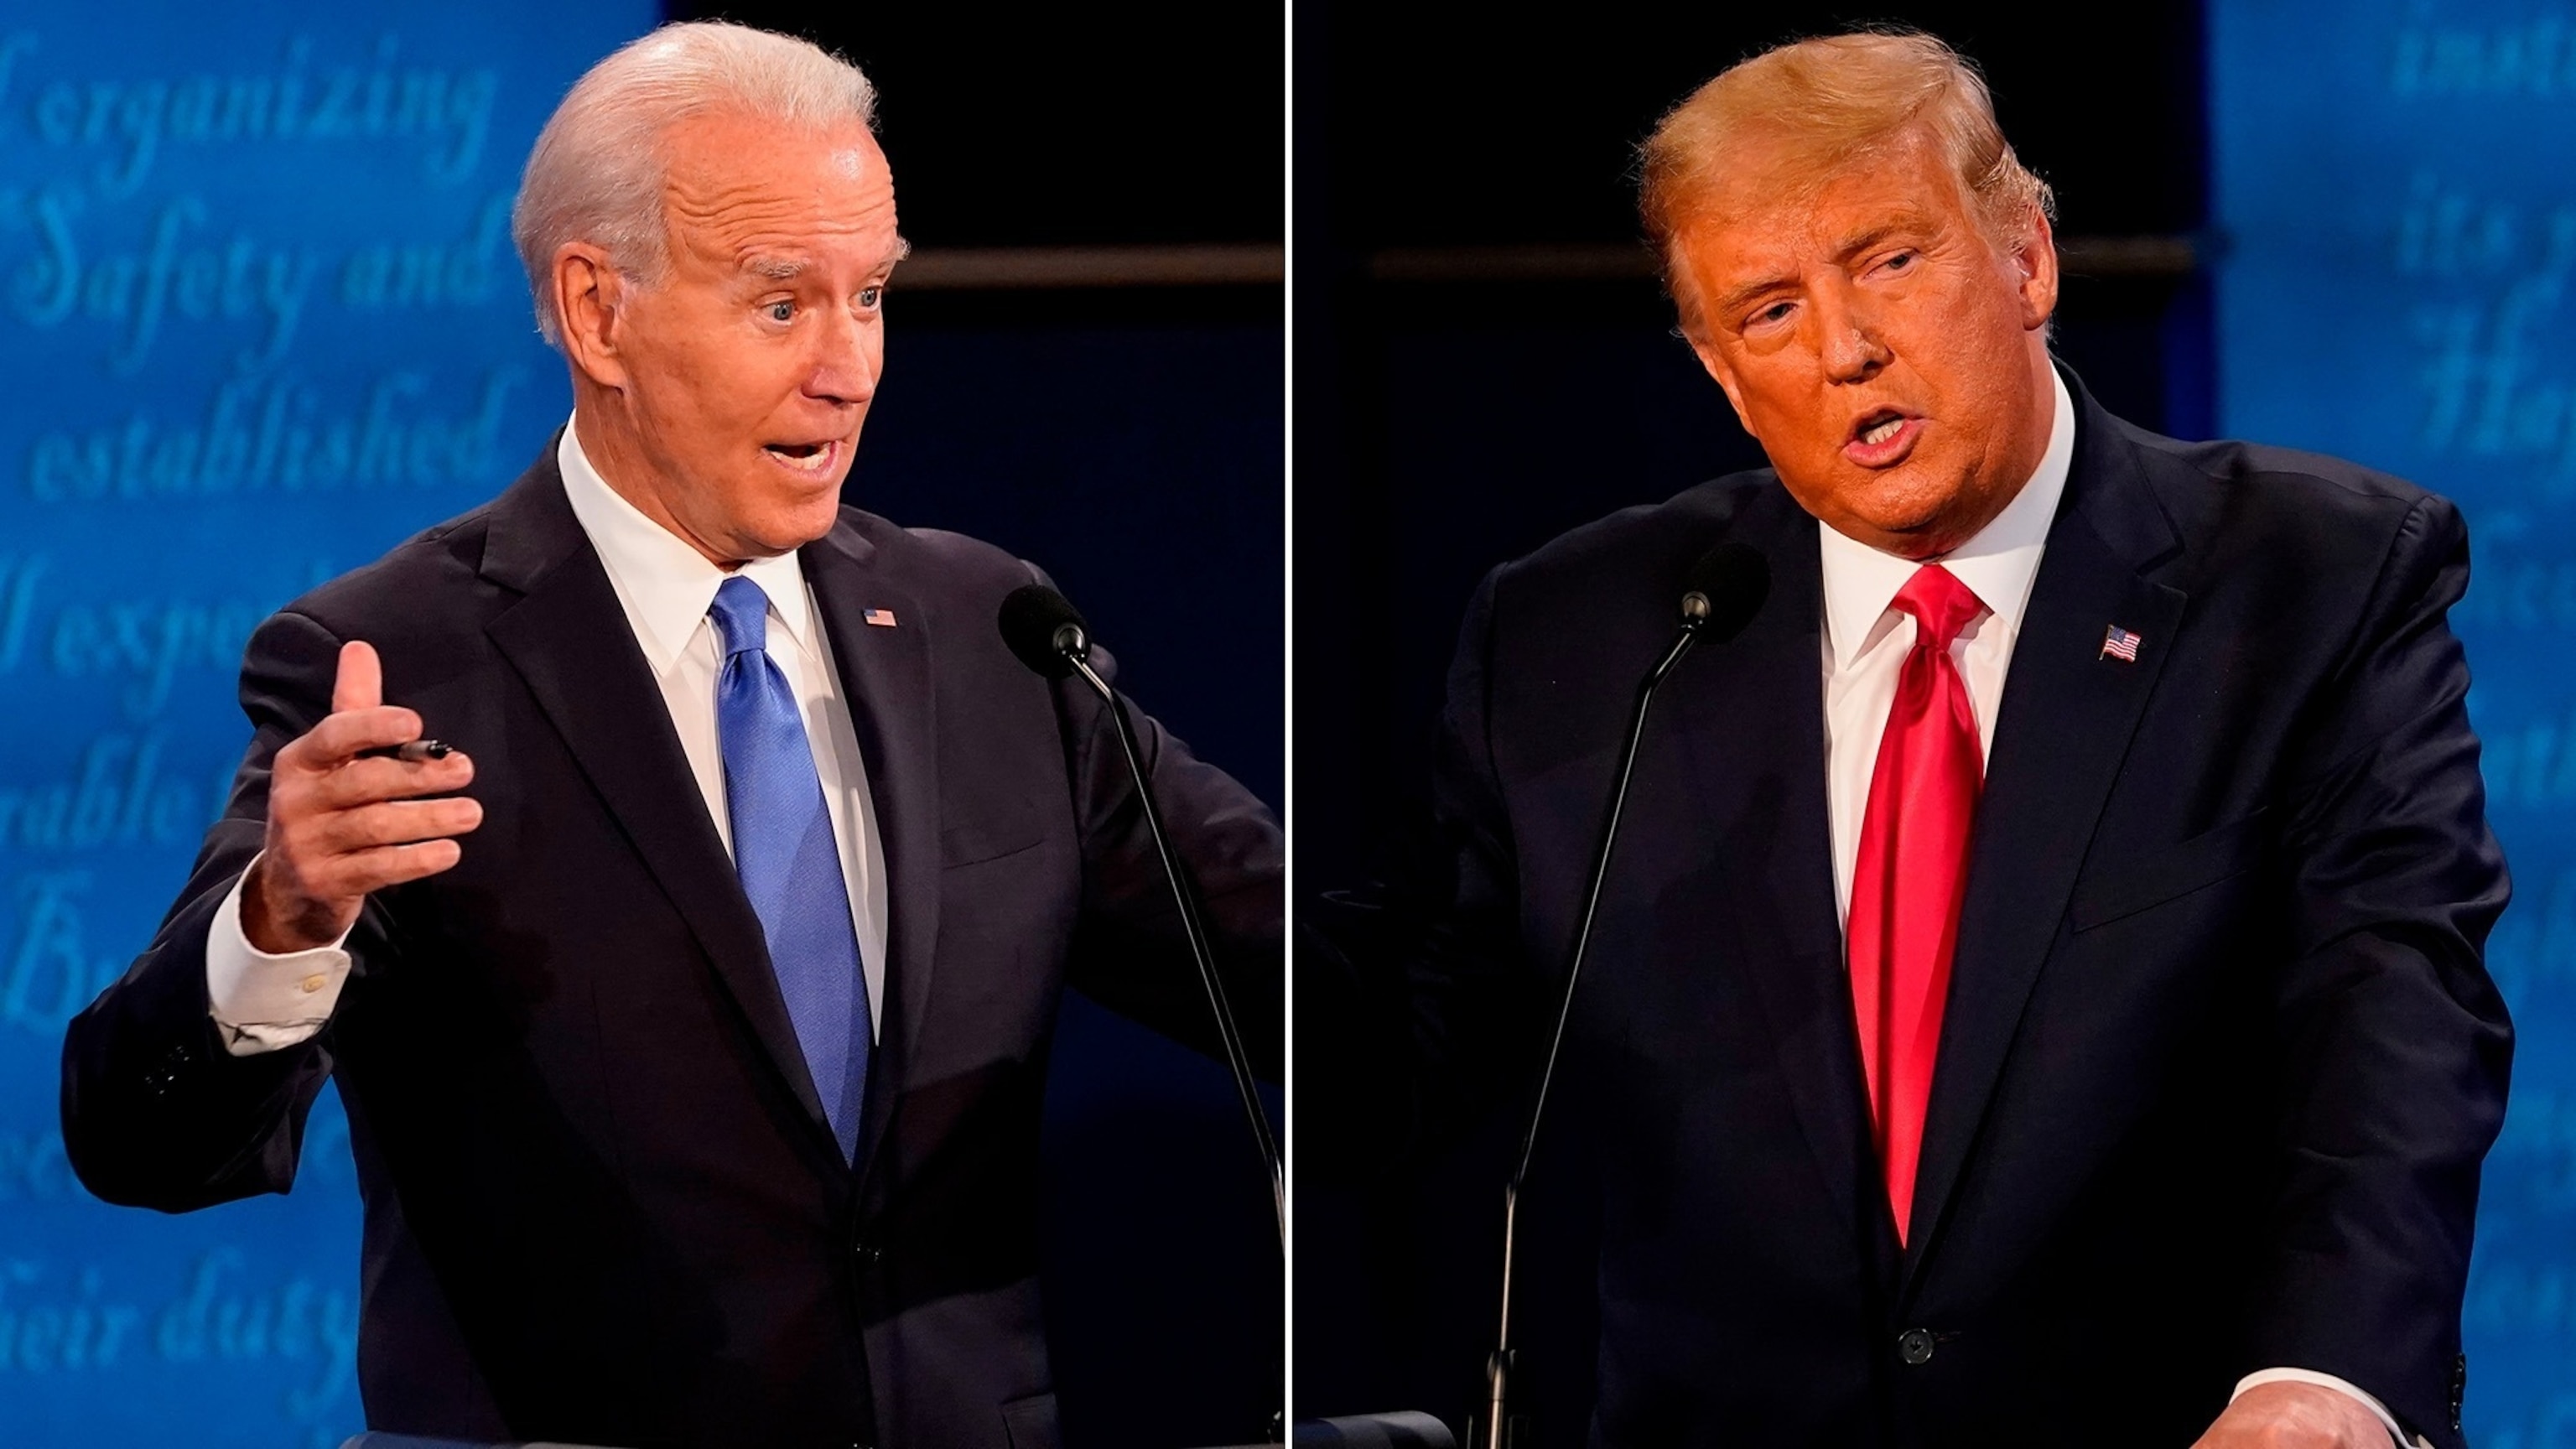 PHOTO: Donald Trump and Joe Biden in 2020 U.S. presidential debates.